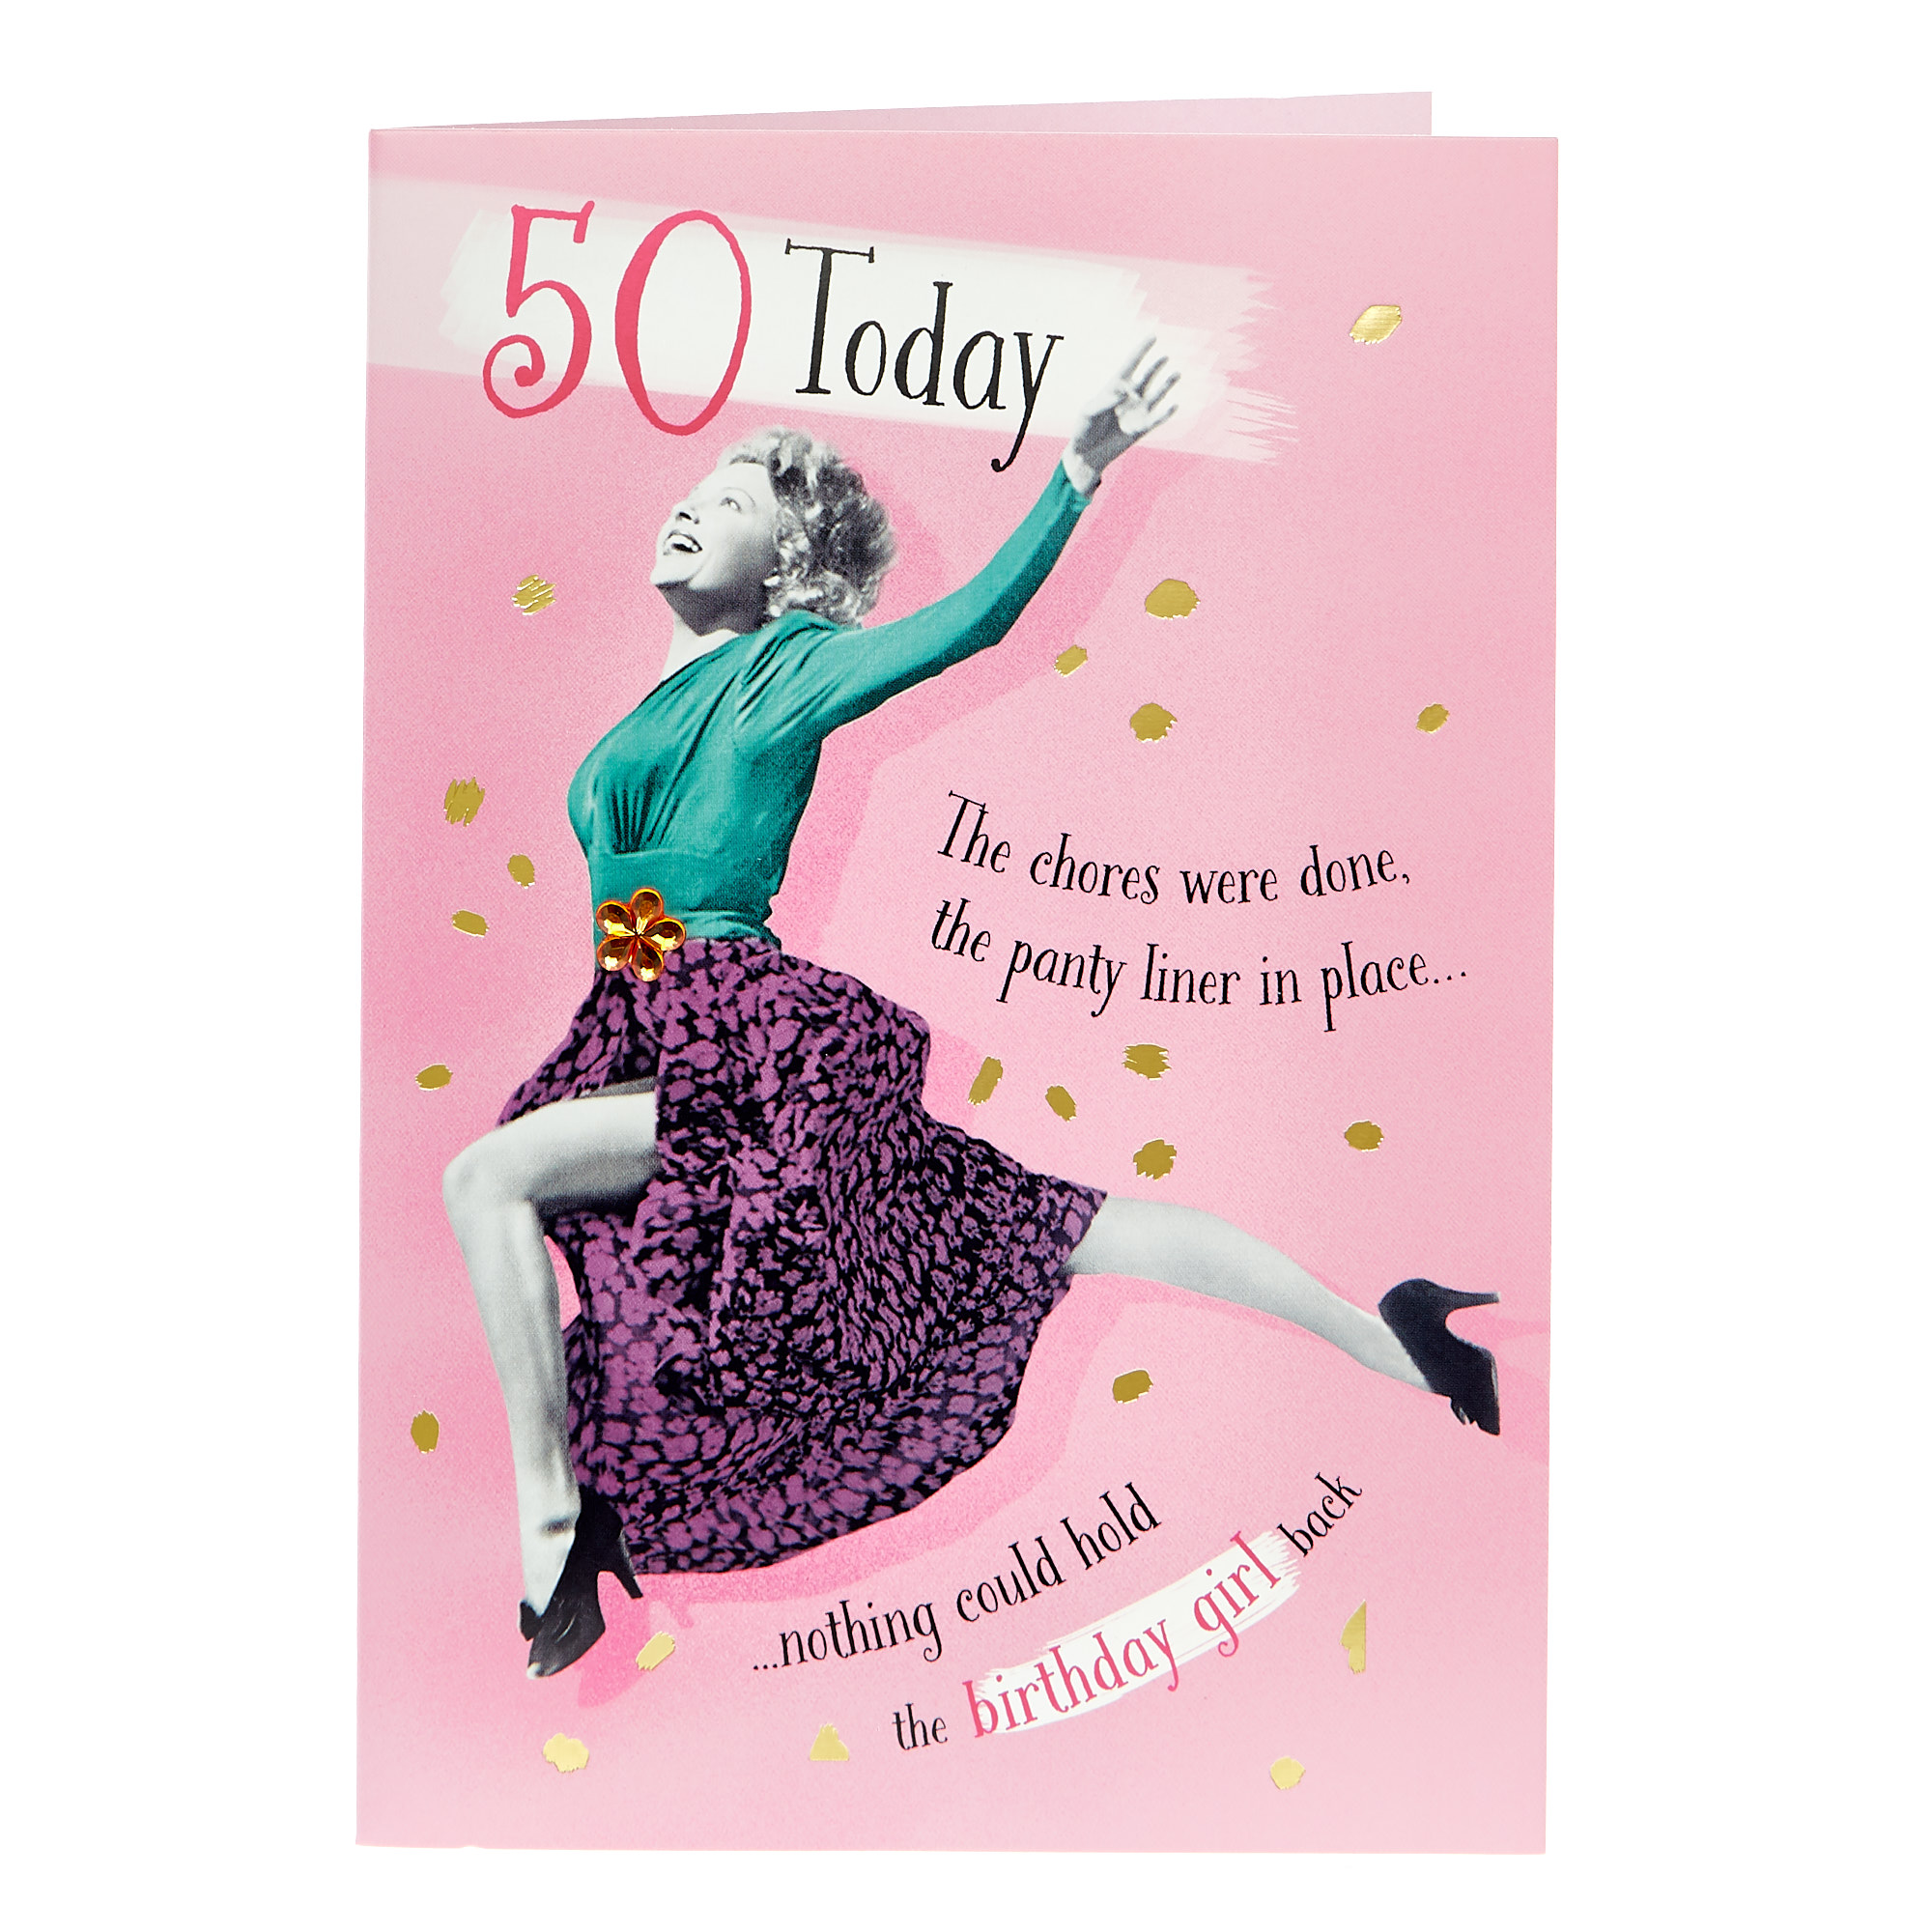 50th Birthday Card - Chores were done...